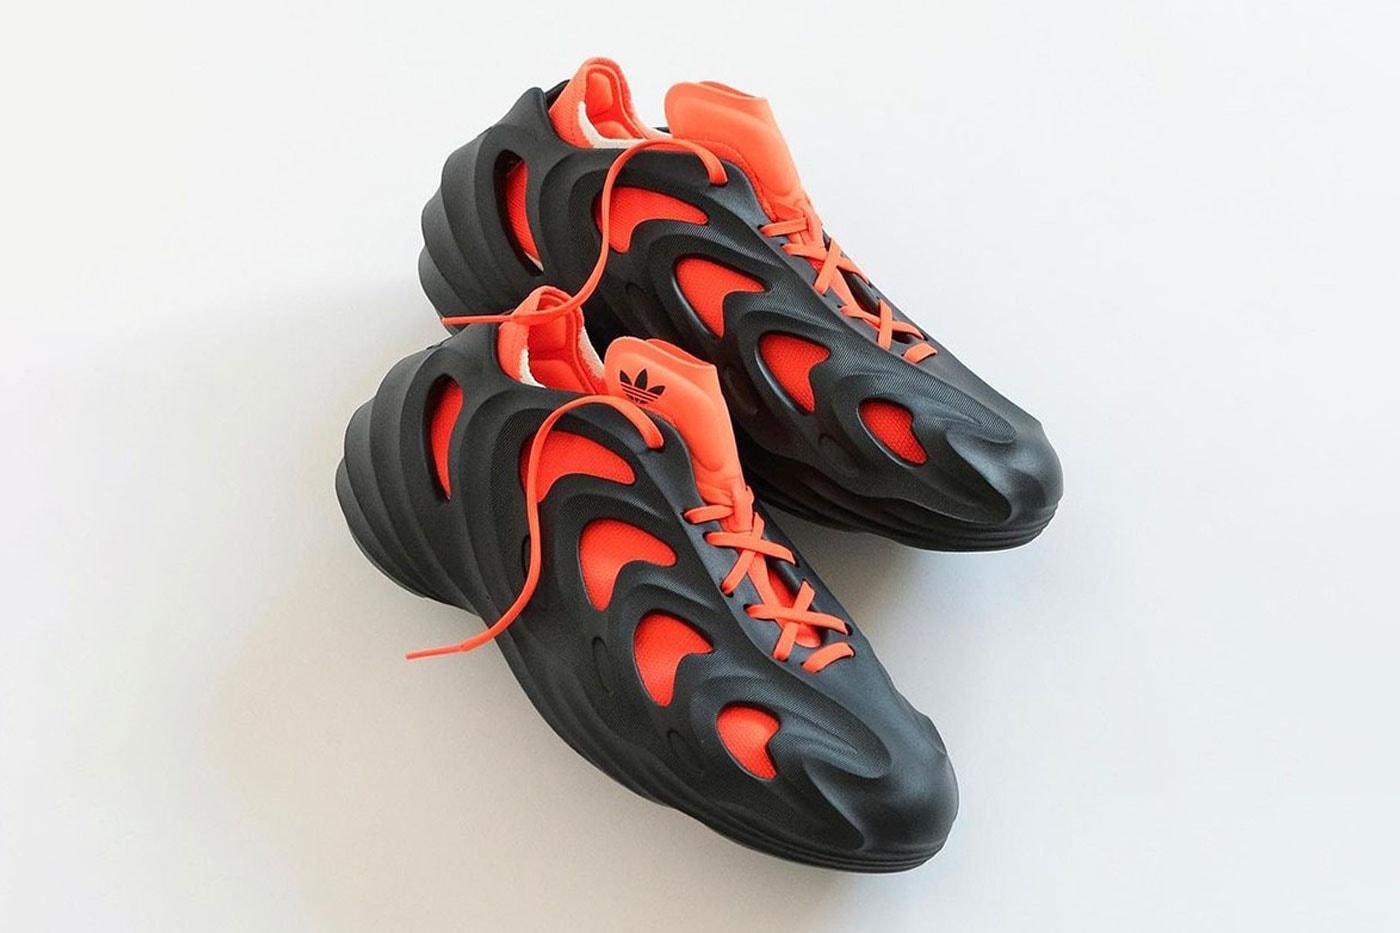 adidas originals adifom q black orange first look yeezy quake EVA primeknit release info